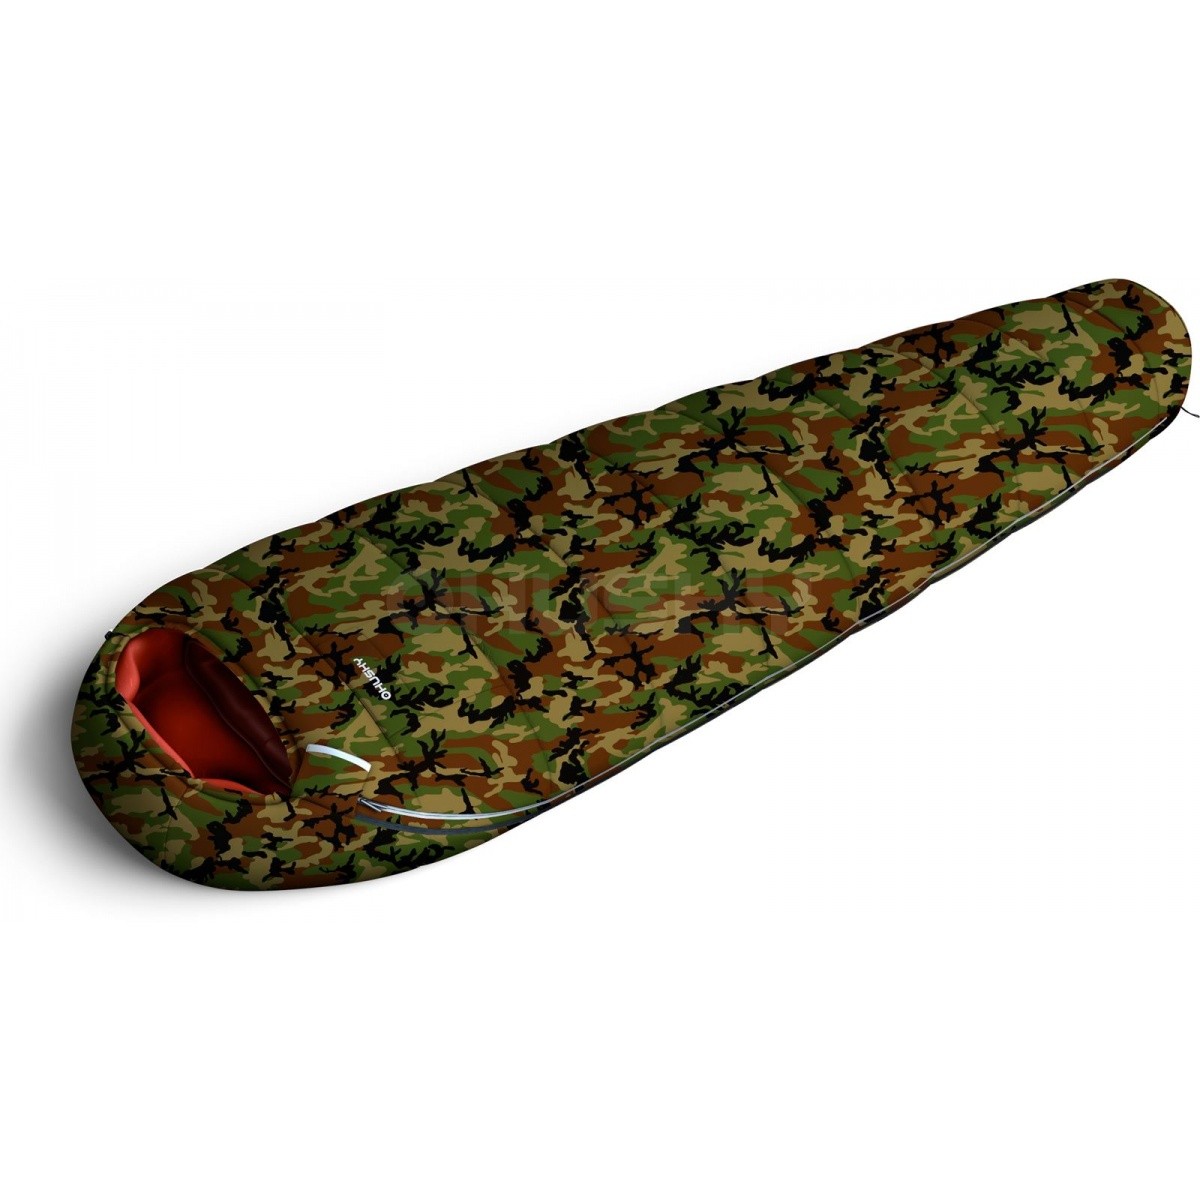 Спален чувал Army Camouflage -17 HUSKY - изглед 1